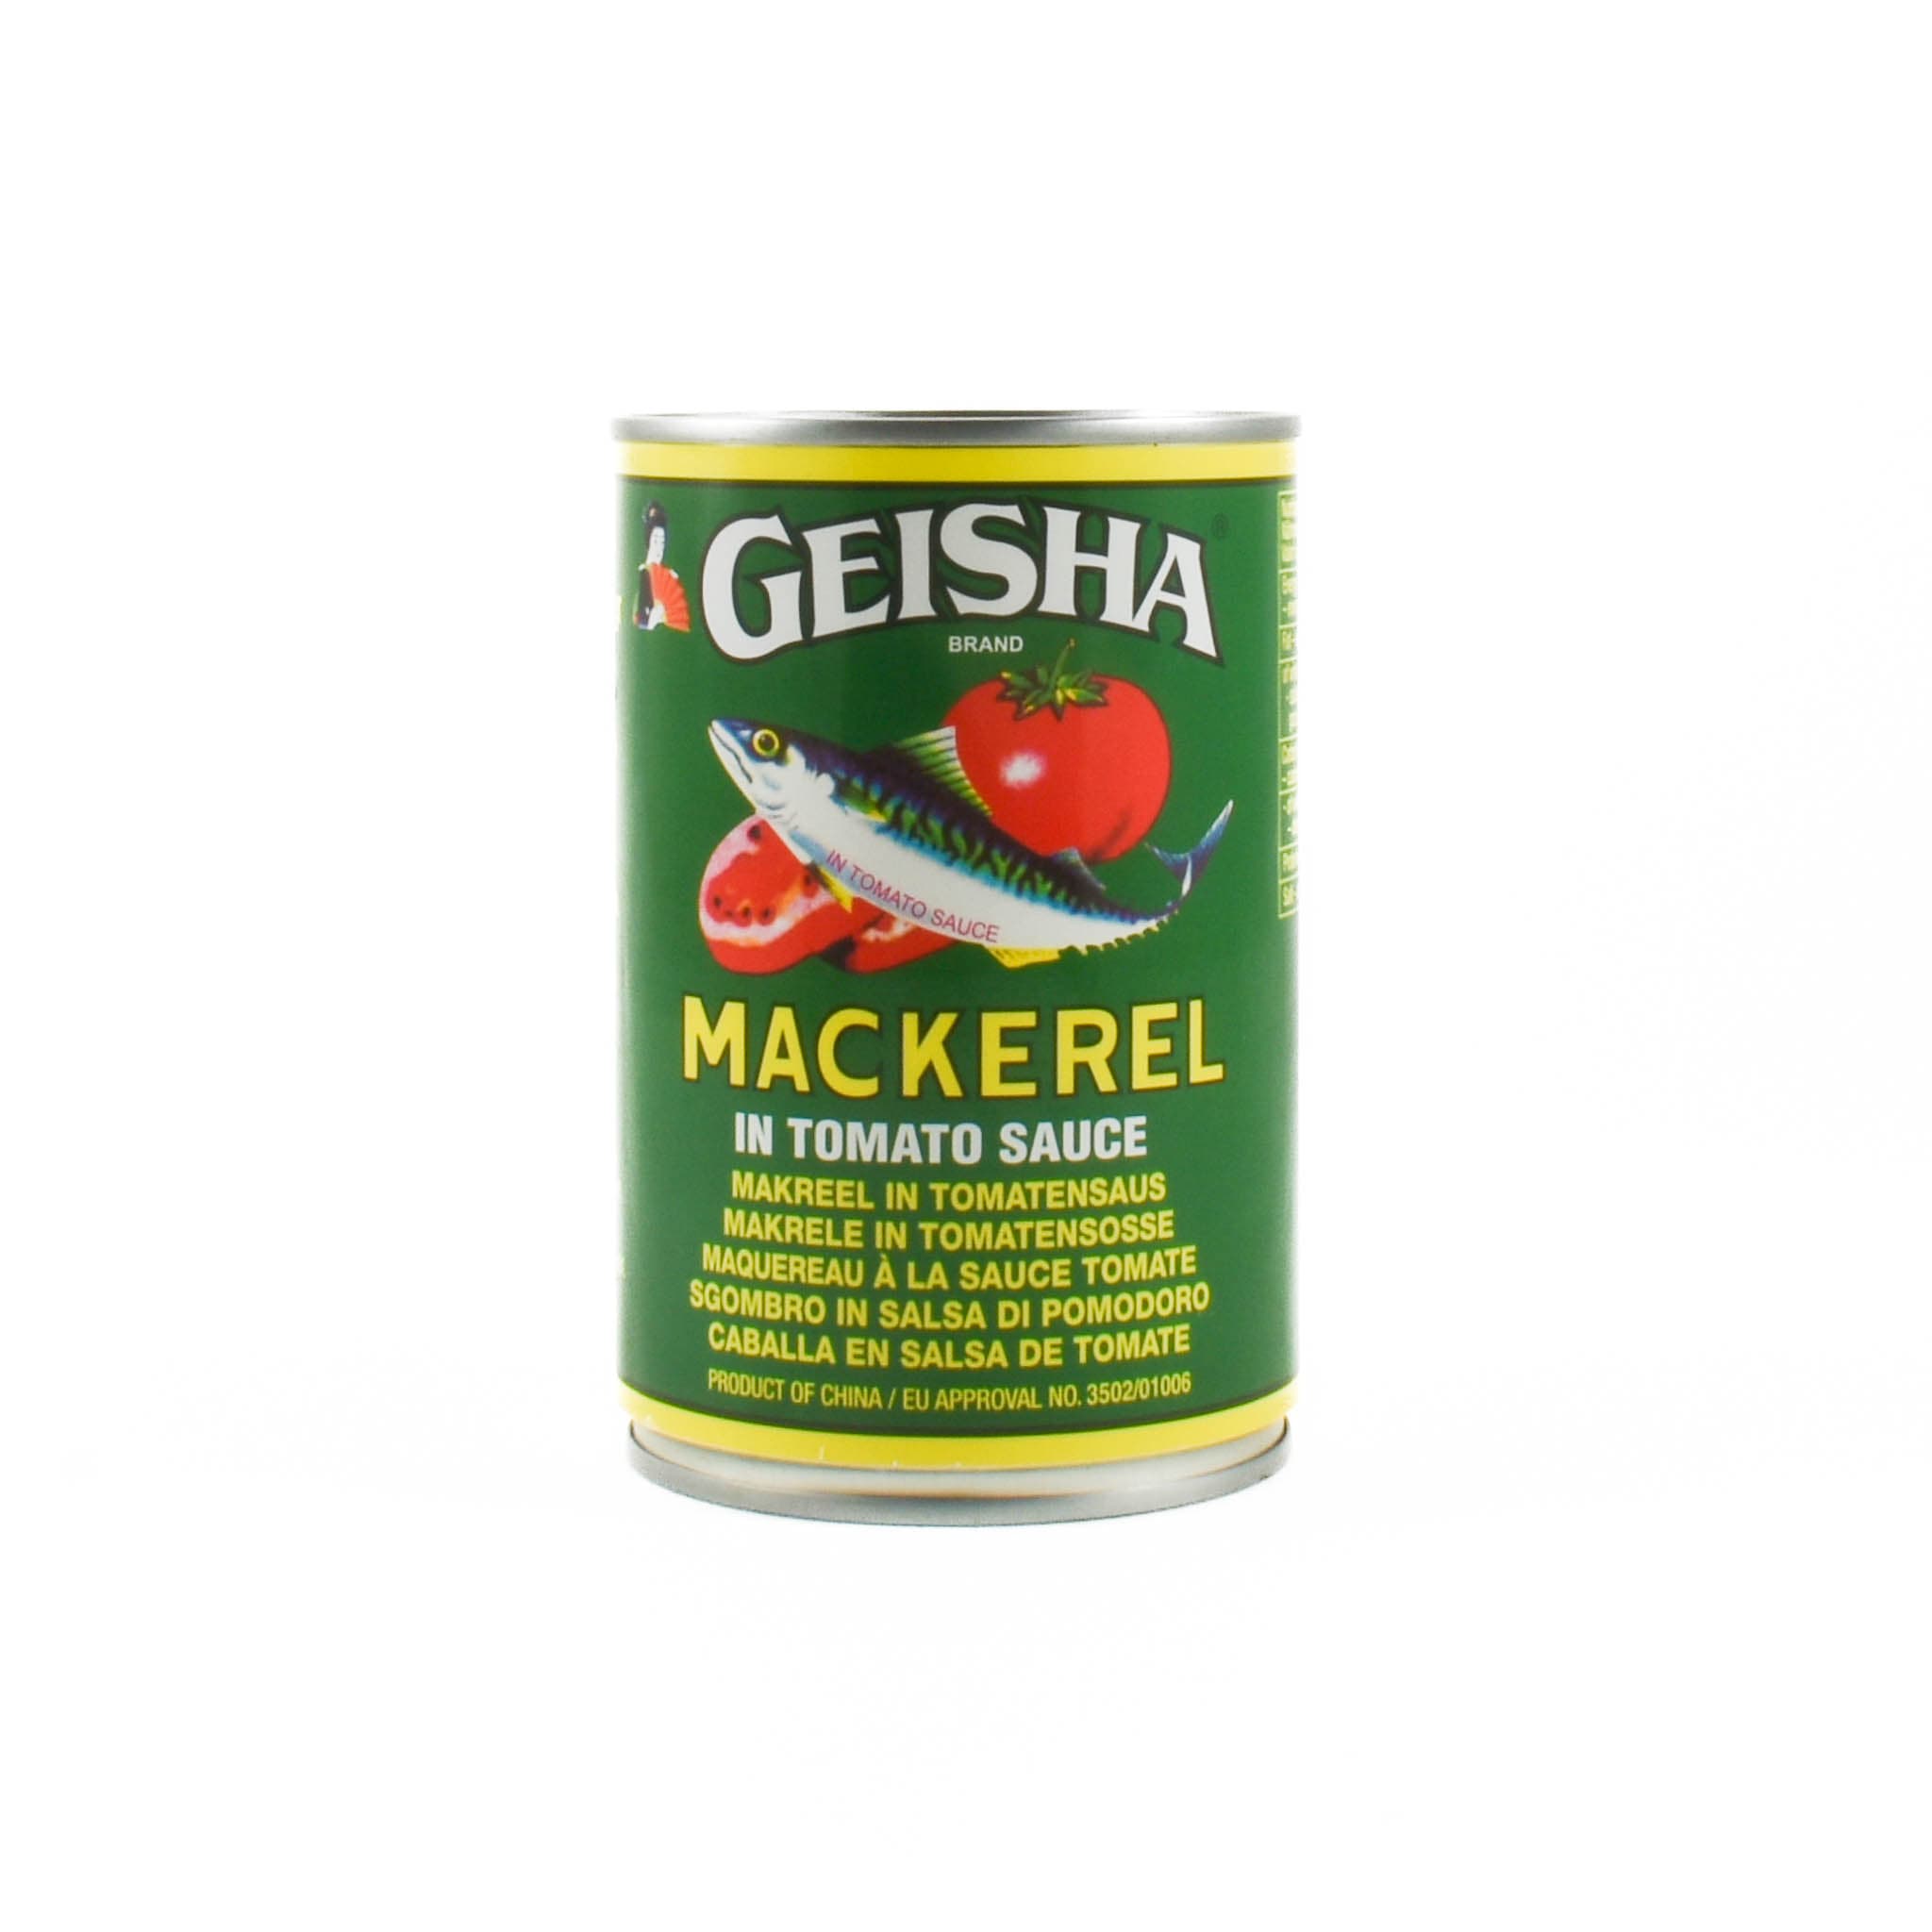 Geisha Mackerel in Tomato Sauce, 425g